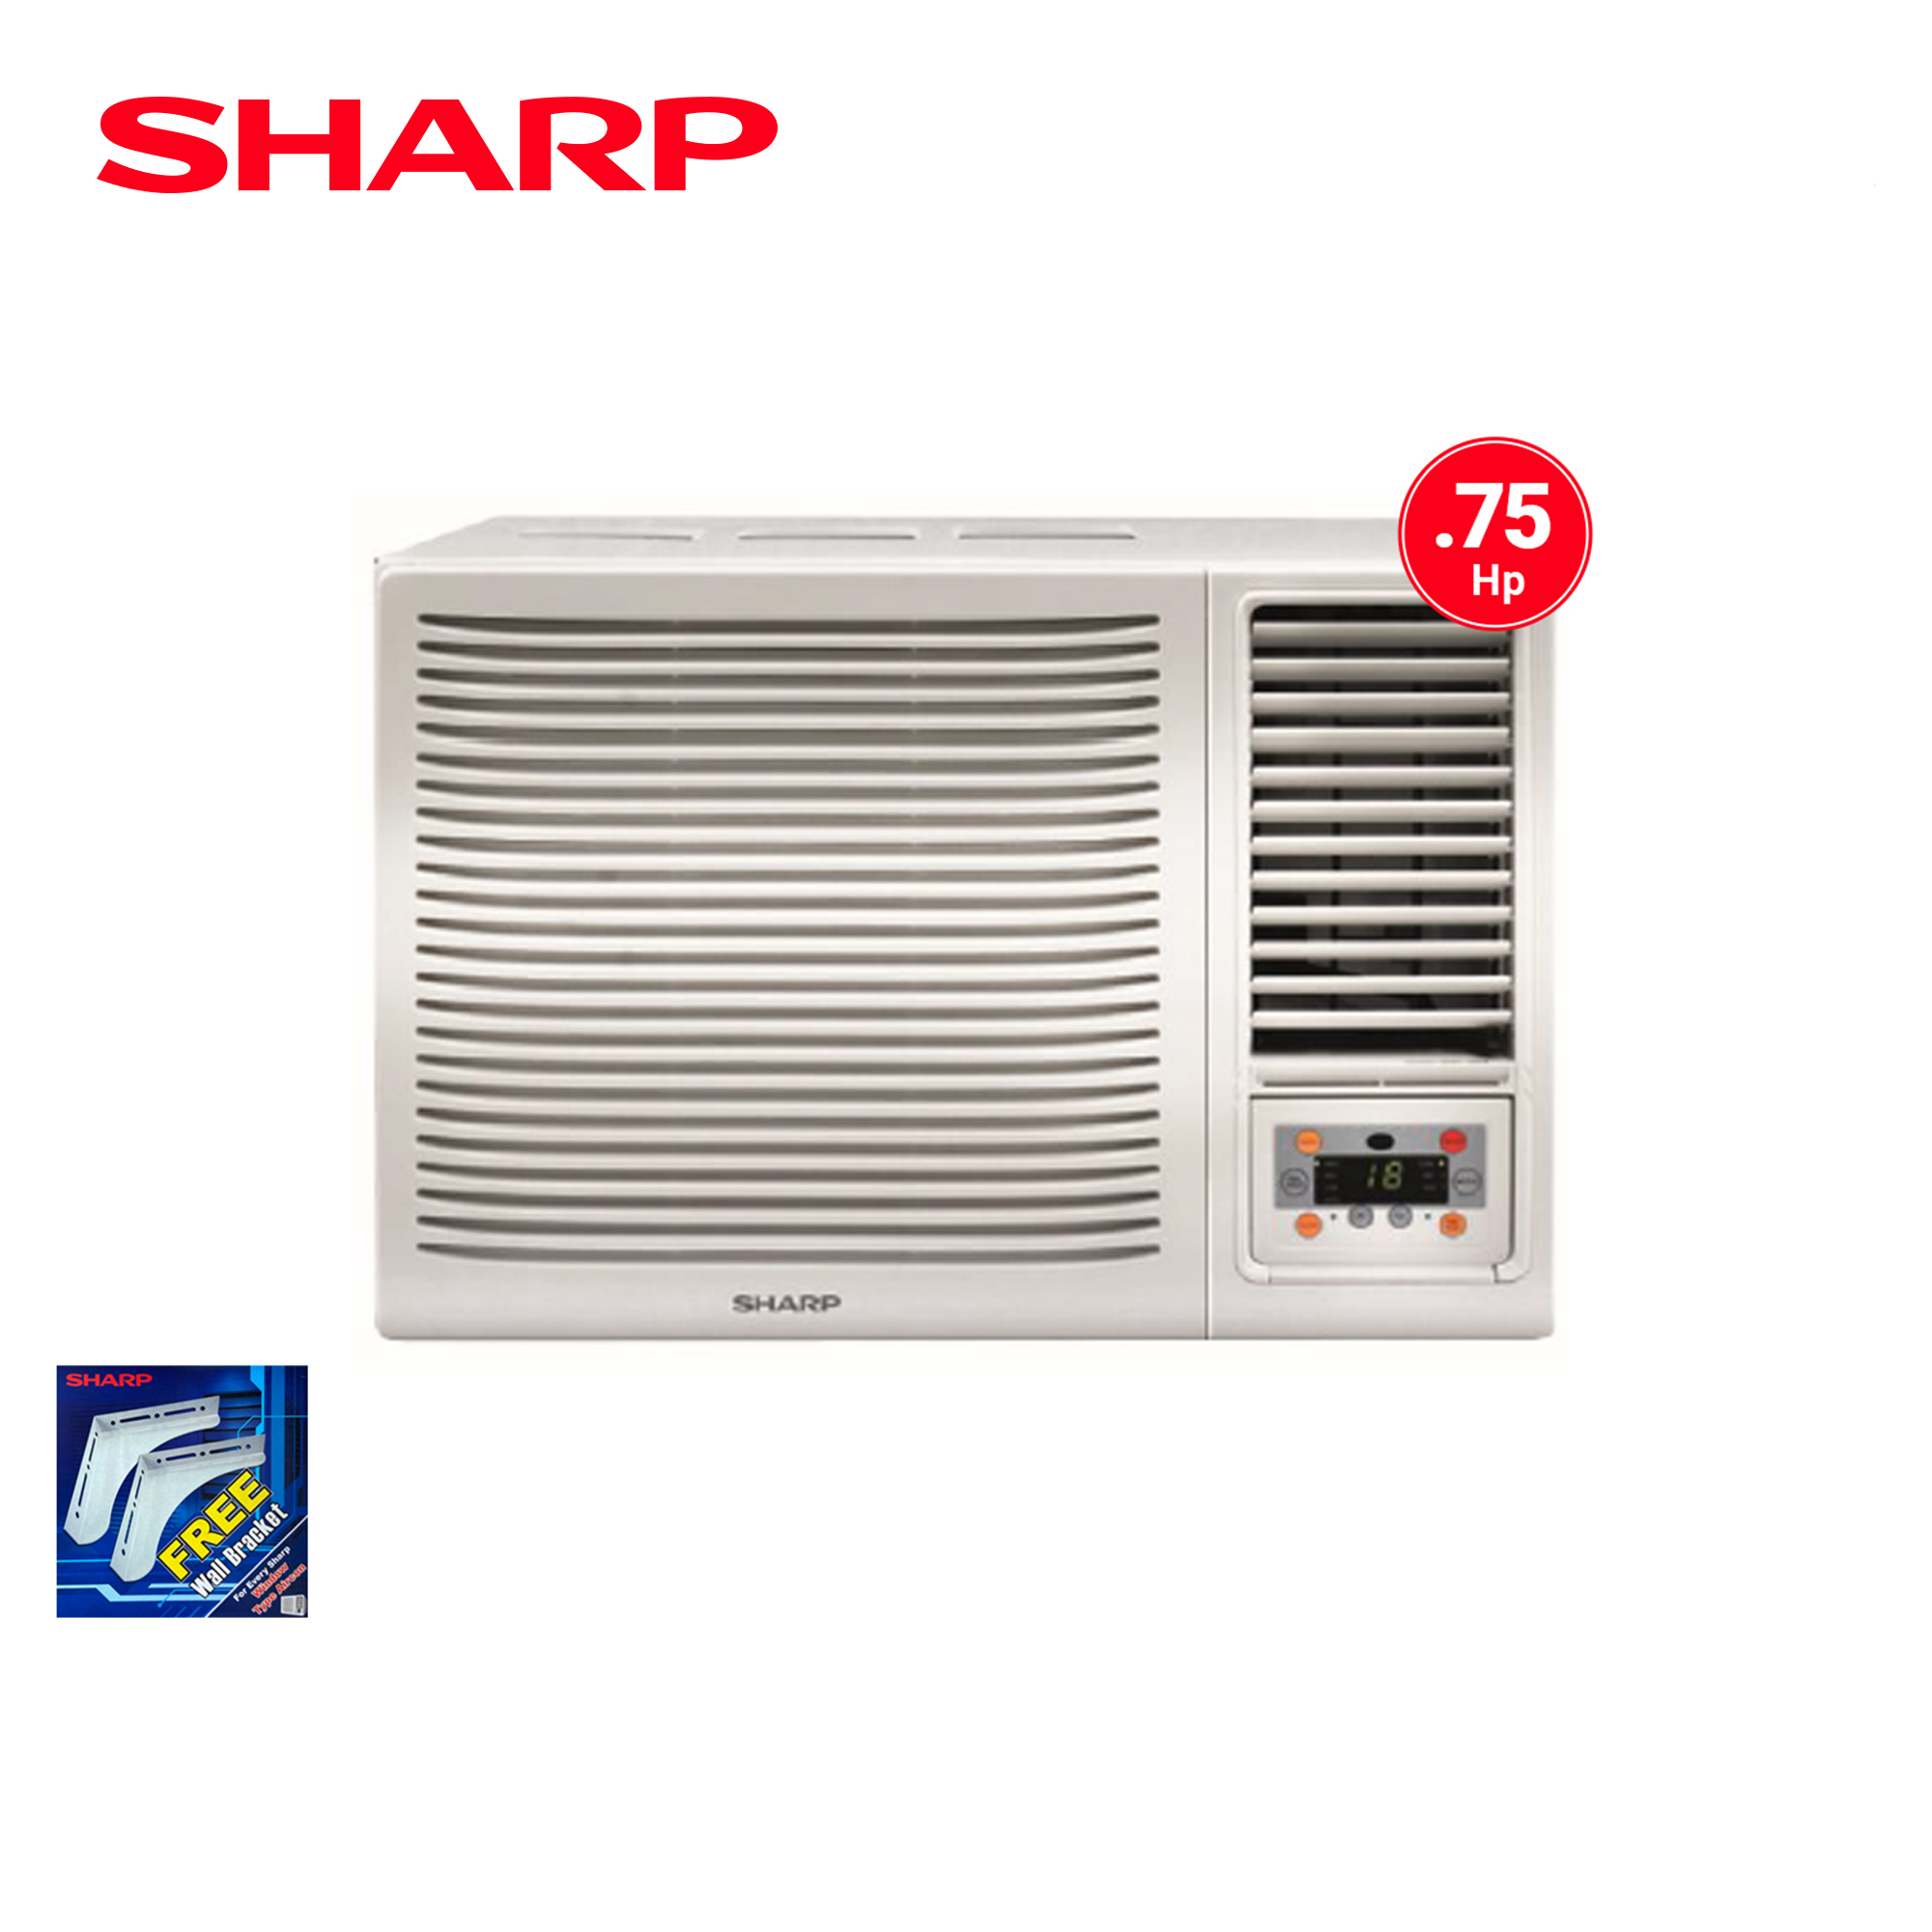 Sharp AF-G820CR 0.75 HP Aircon Manual Control Window Type Air